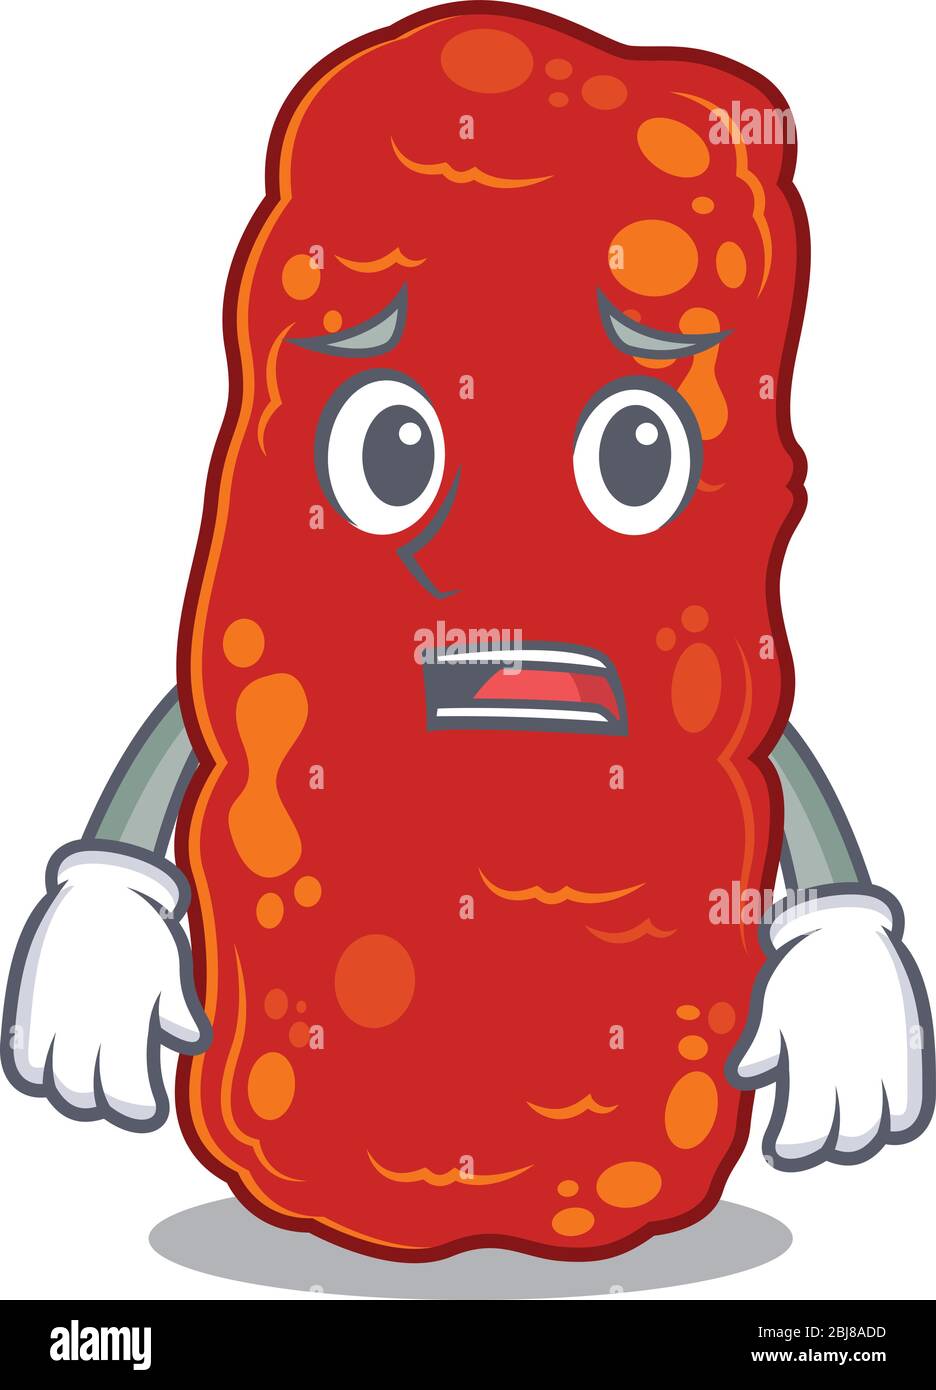 Cartoon design style of acinetobacter bacteria showing worried face Stock Vector